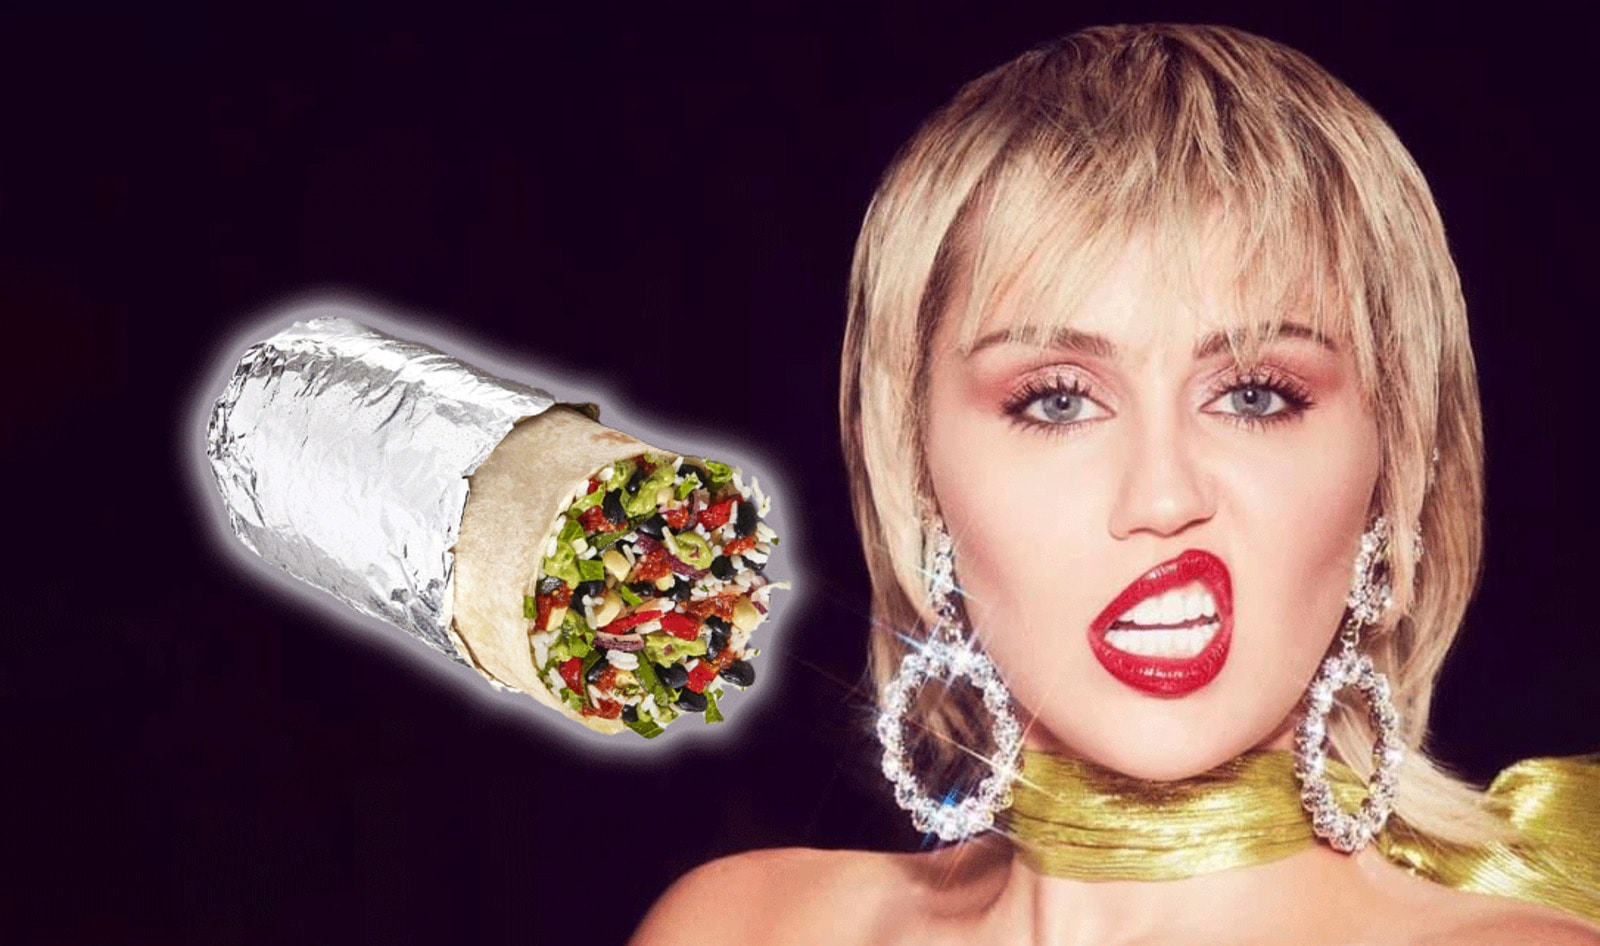 Chipotle Names Vegan Burrito After Miley Cyrus